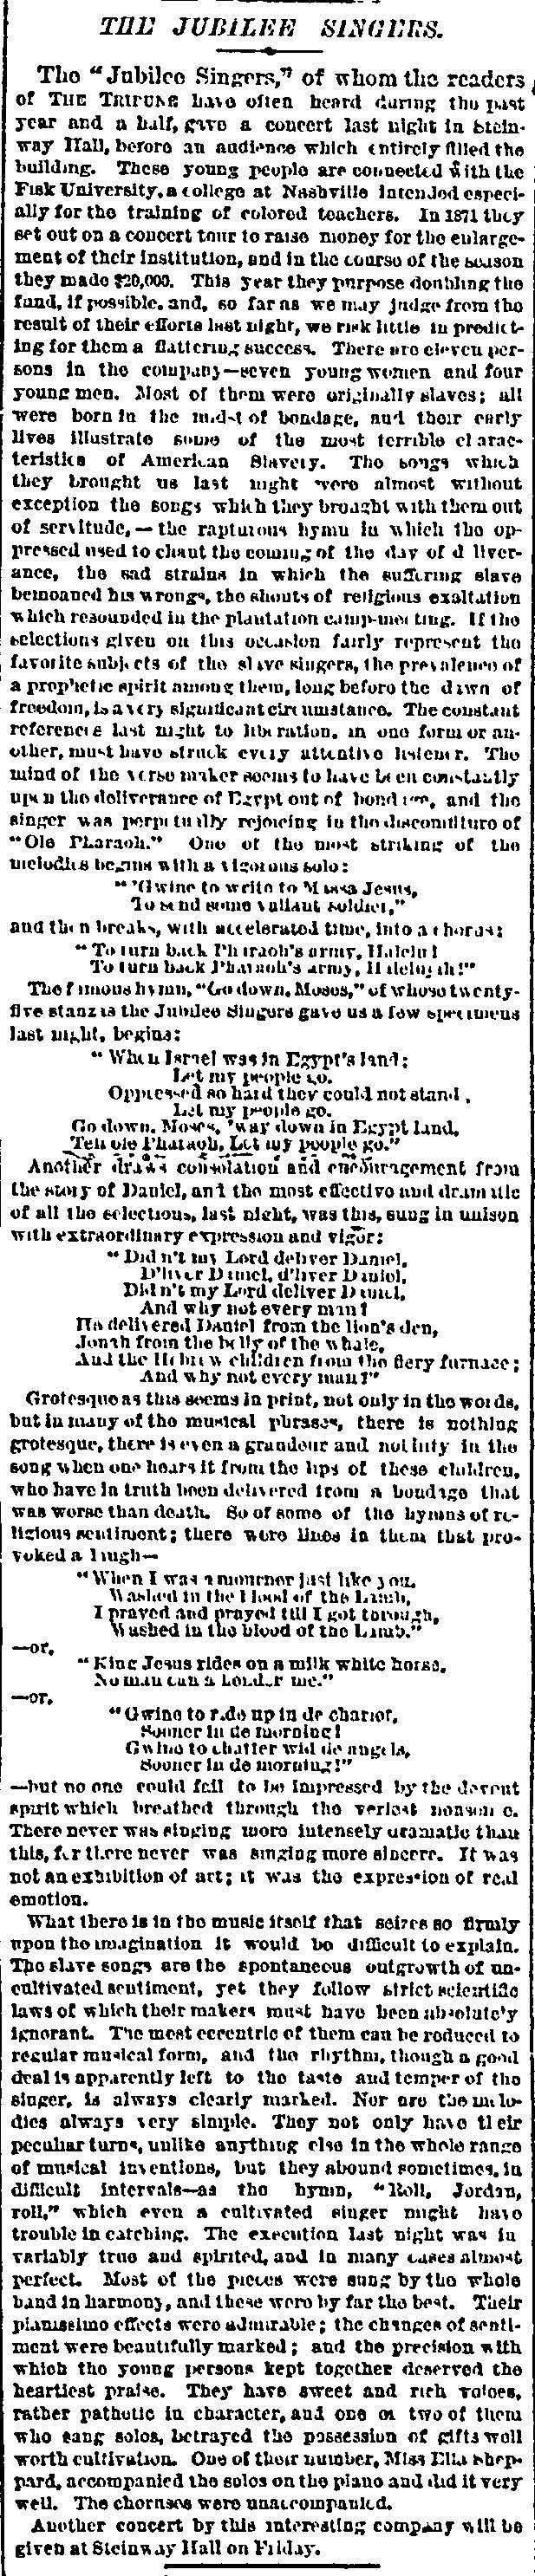 New York Tribune, January 15, 1873. America’s Historical Newspapers.